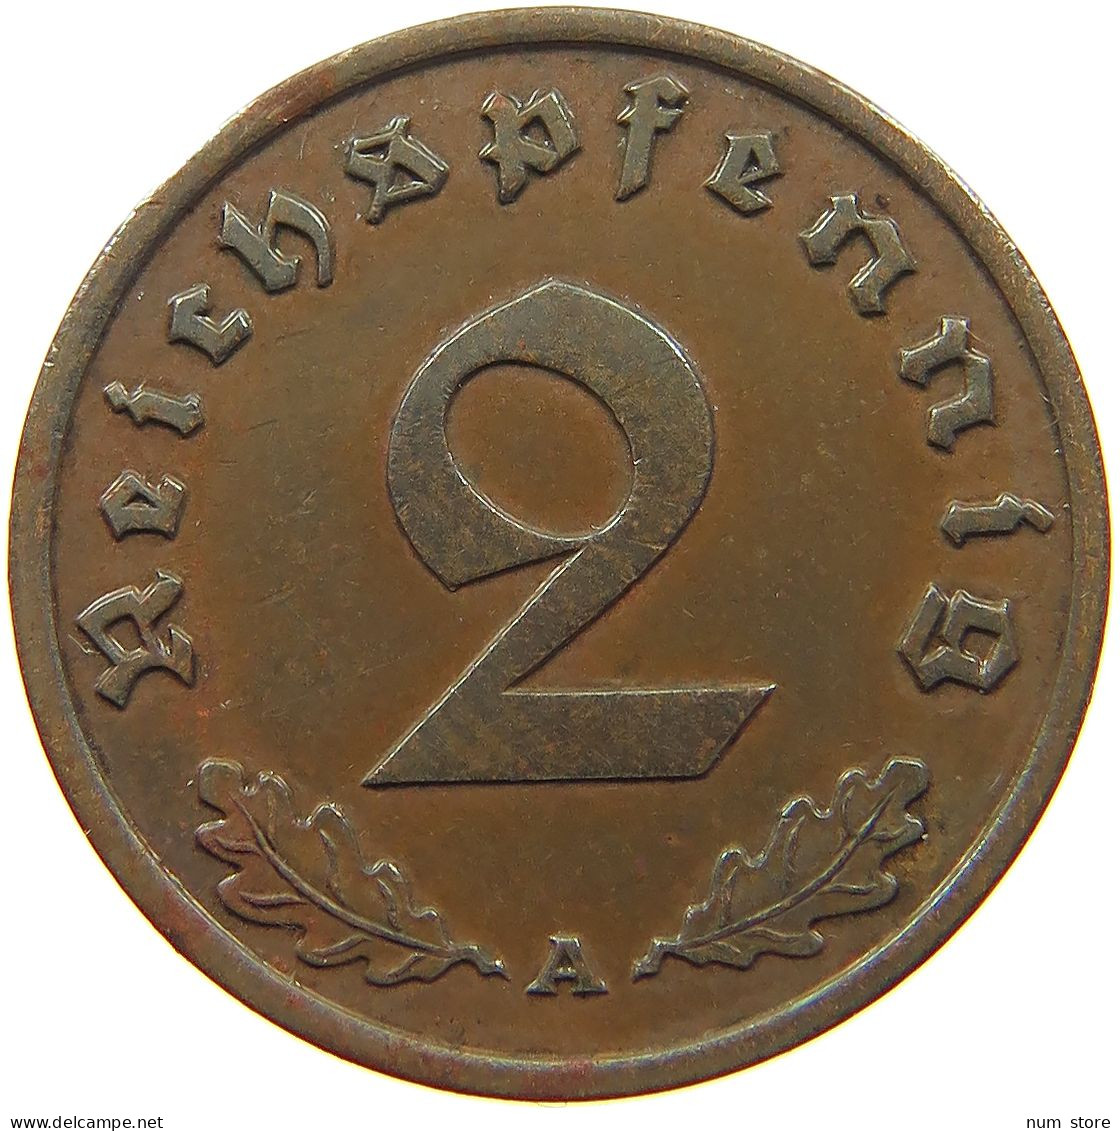 GERMANY 2 PFENNIG 1937 A #c083 0161 - 2 Reichspfennig